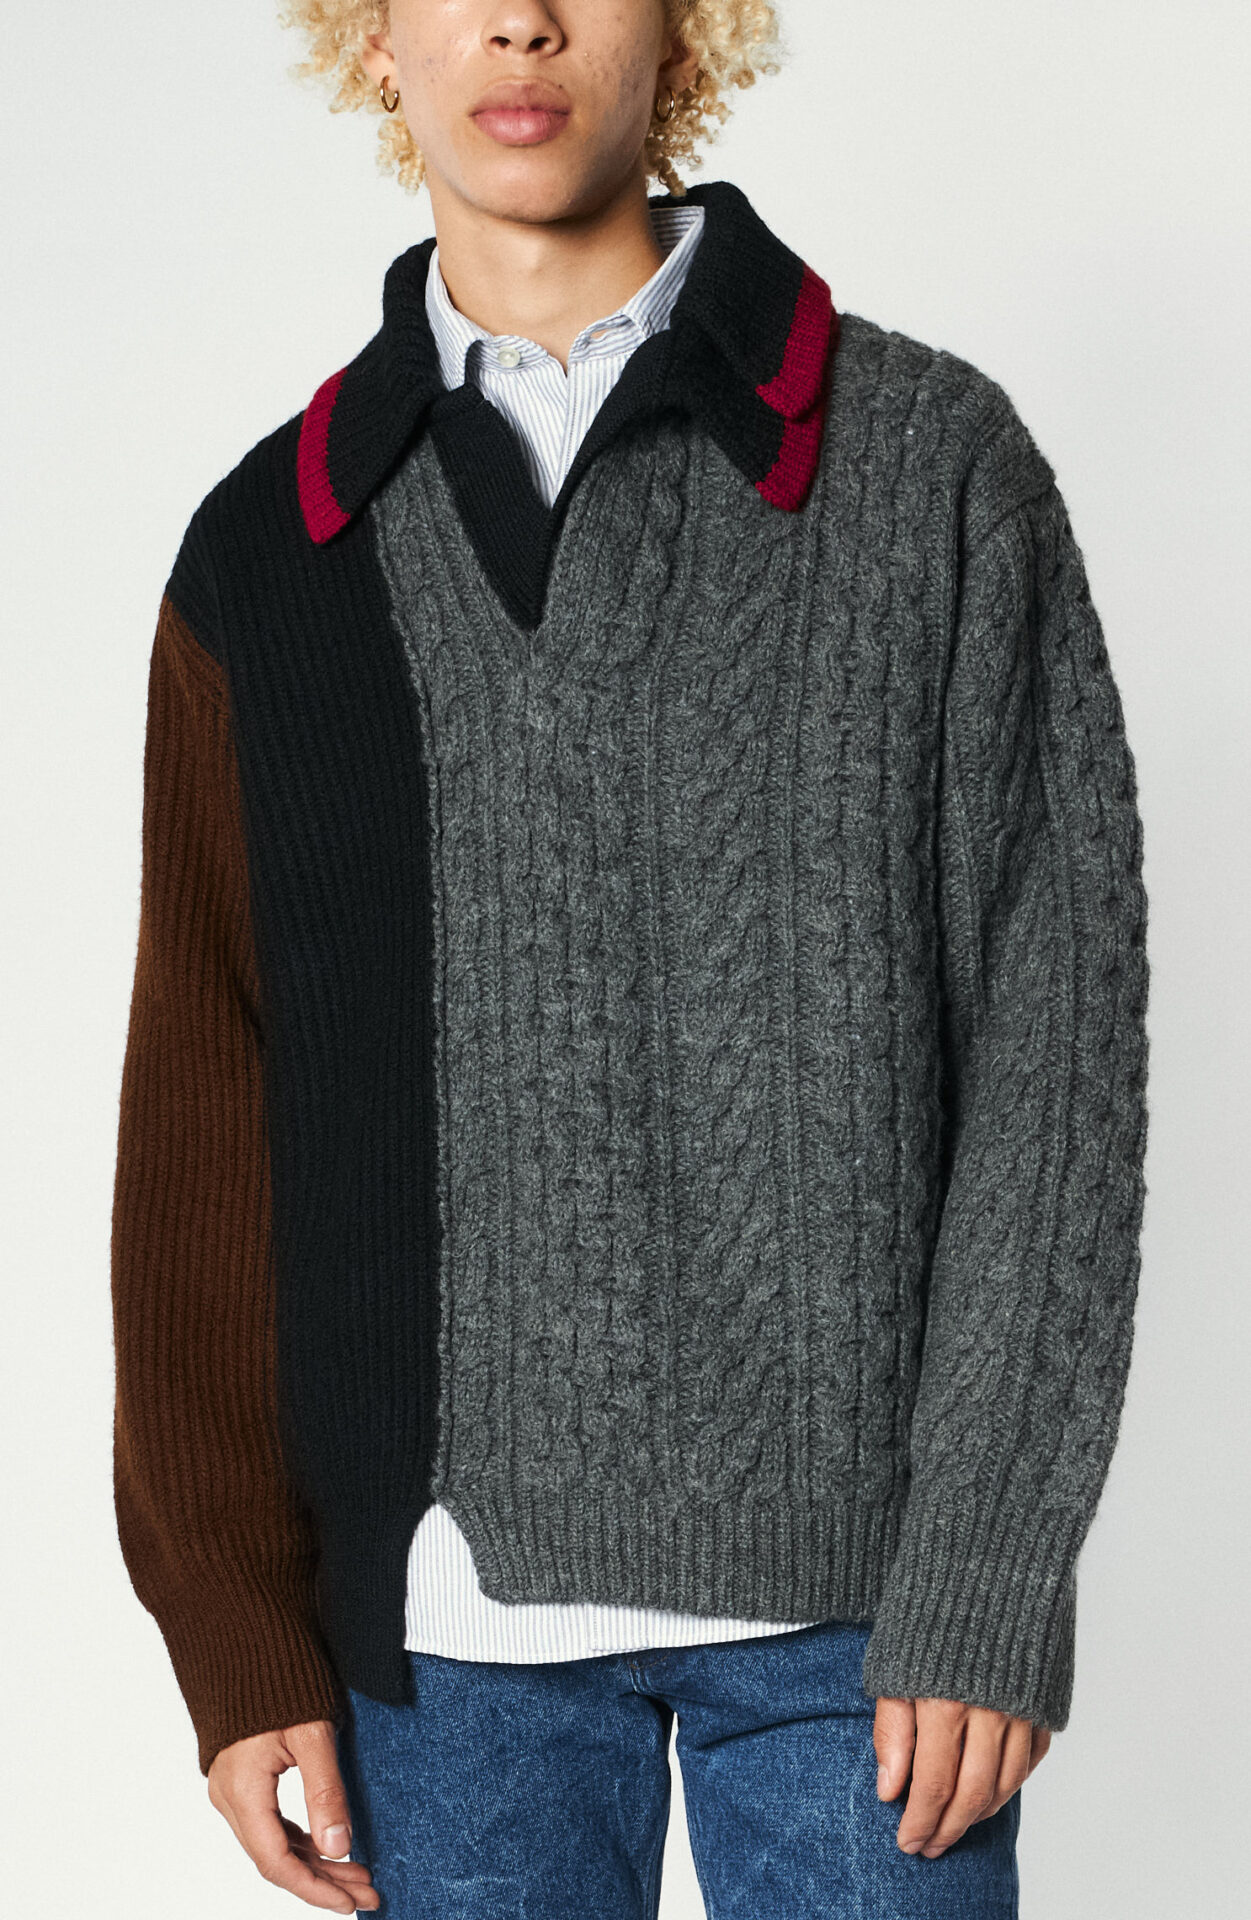 Rabatt 89 % Pull&Bear Pullover HERREN Pullovers & Sweatshirts Stricken Grau M 